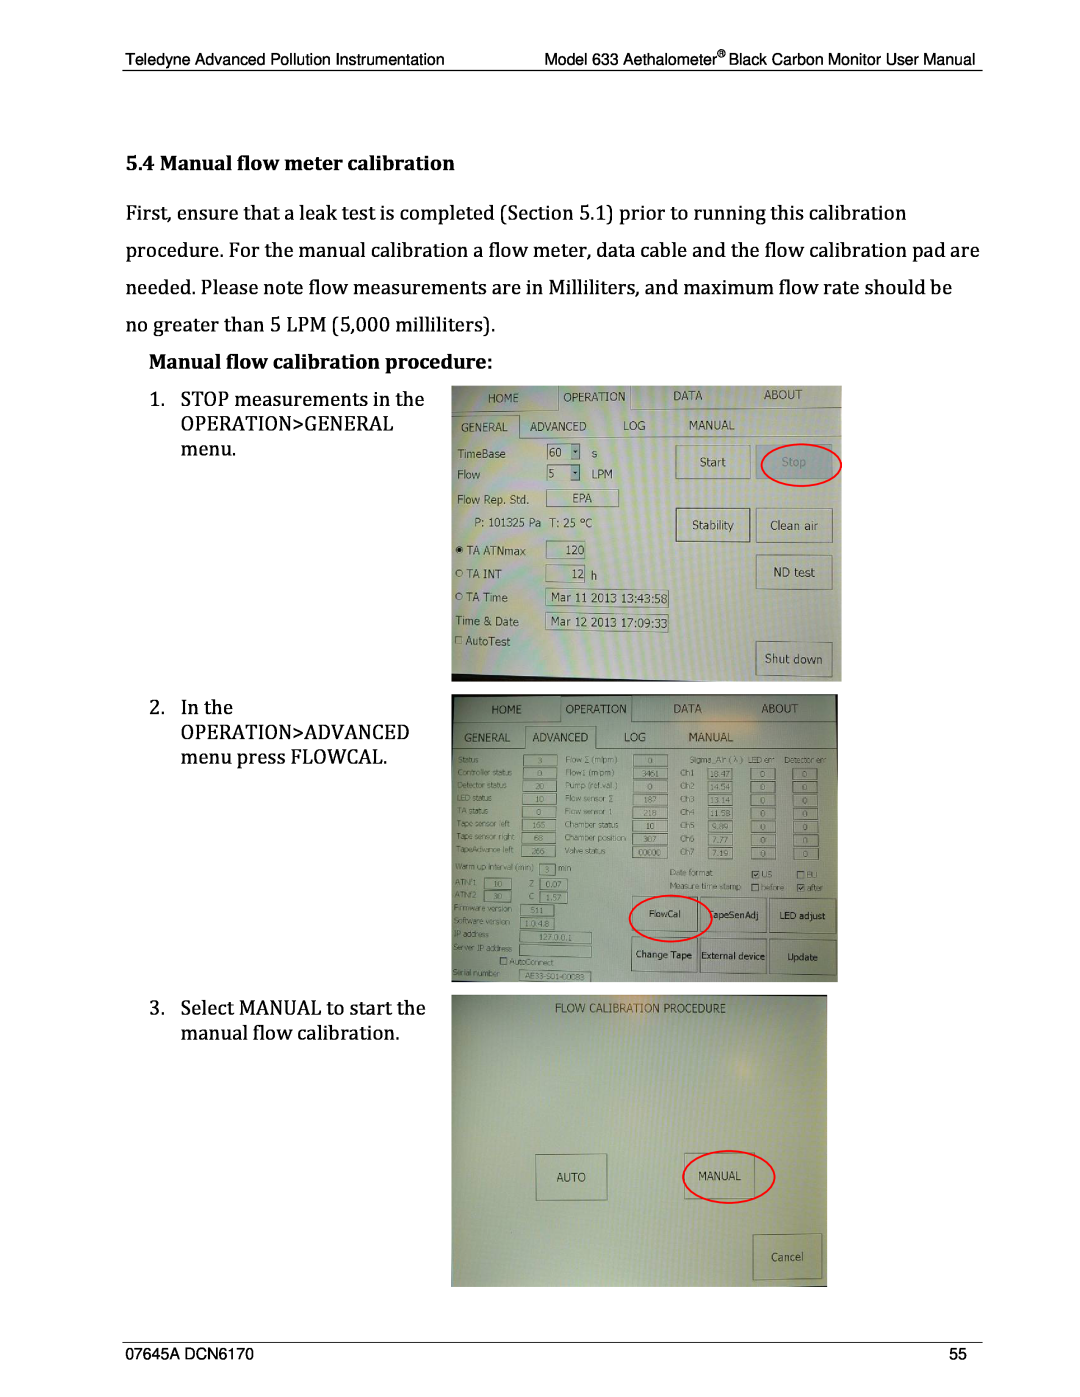 Teledyne 633 user manual Manual flow meter calibration, Manual flow calibration procedure 